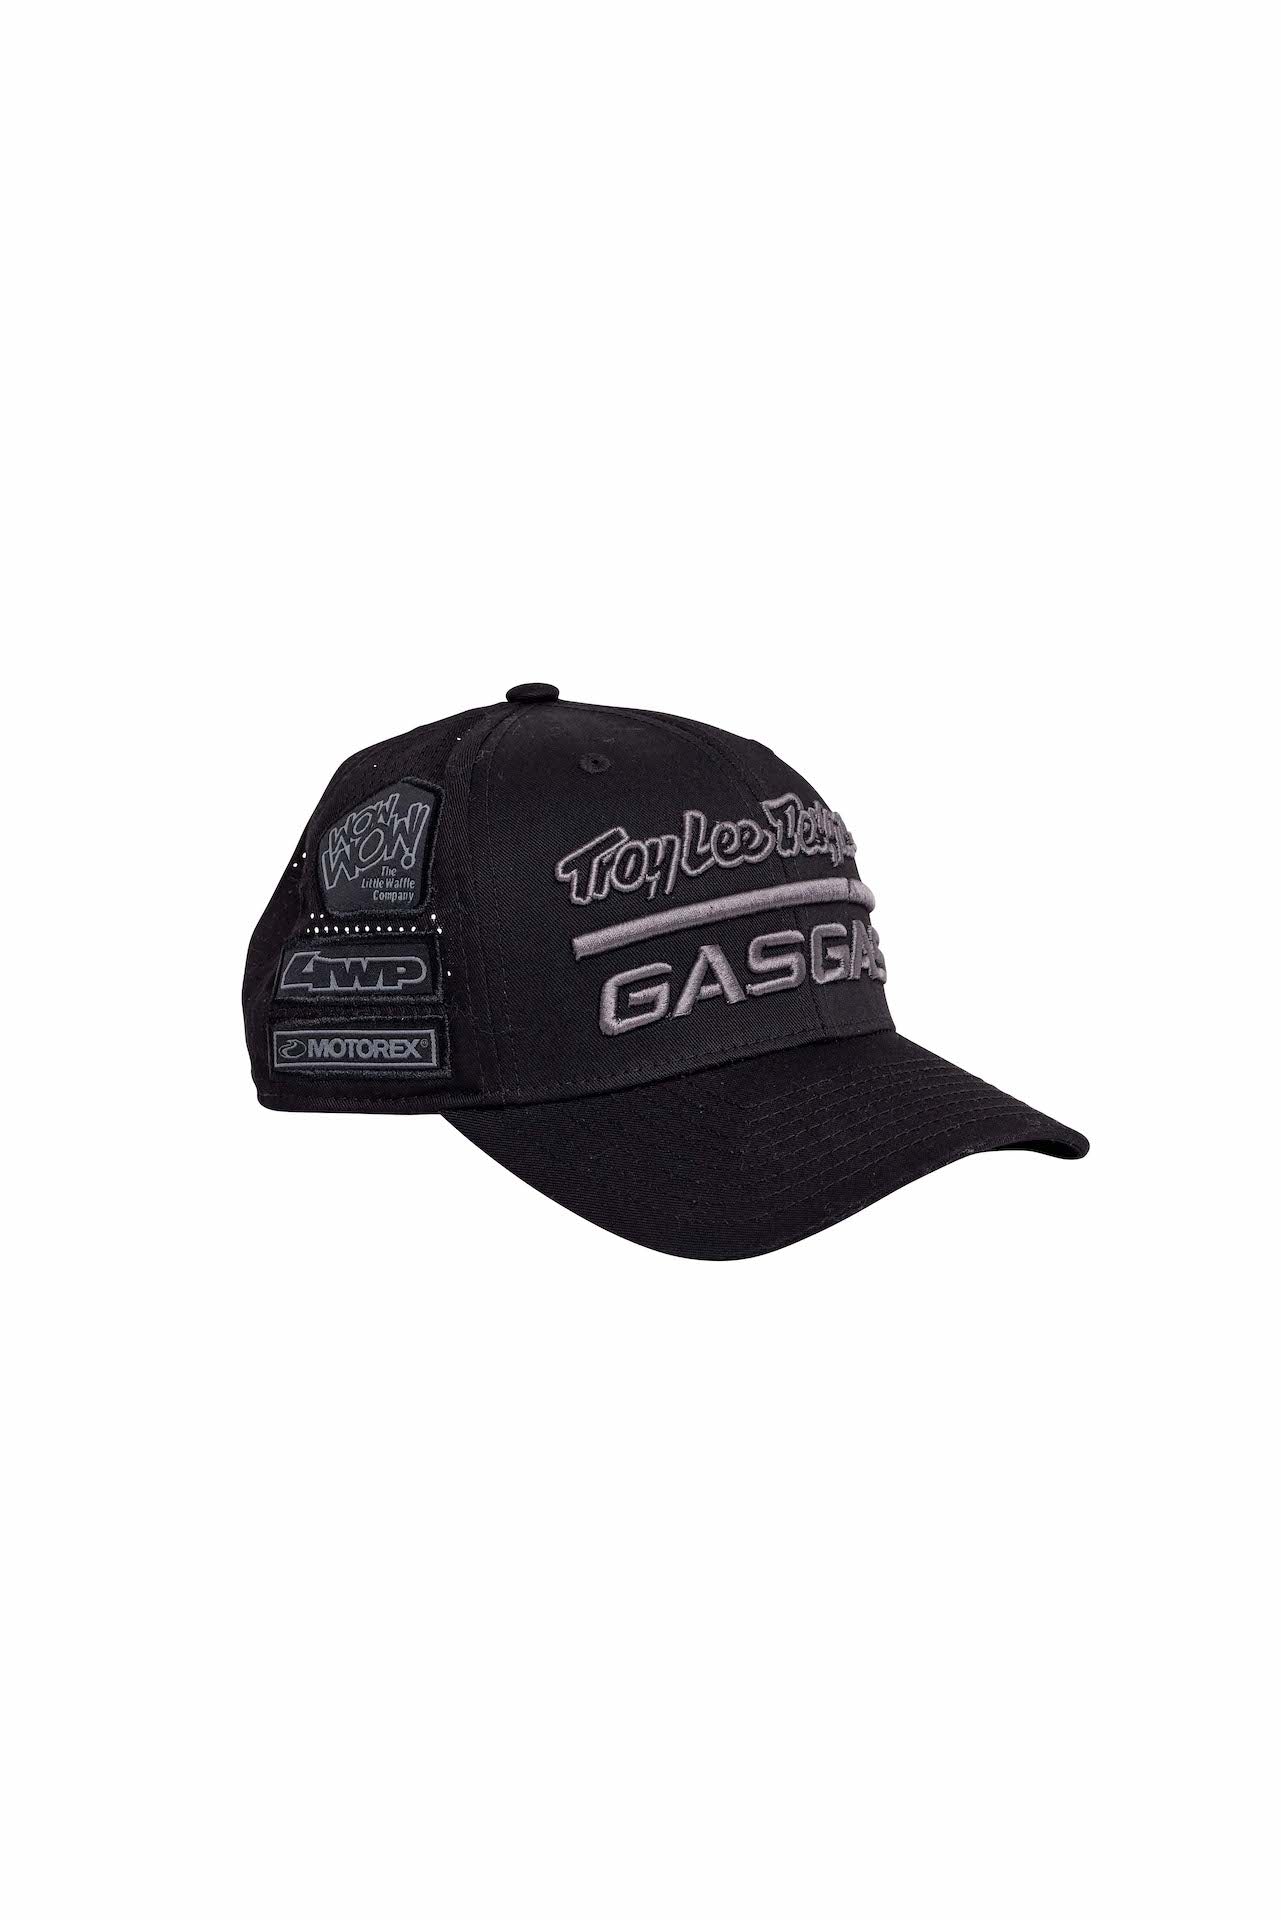 TROY LEE DESIGNS GASGAS TEAM CURVED CAP